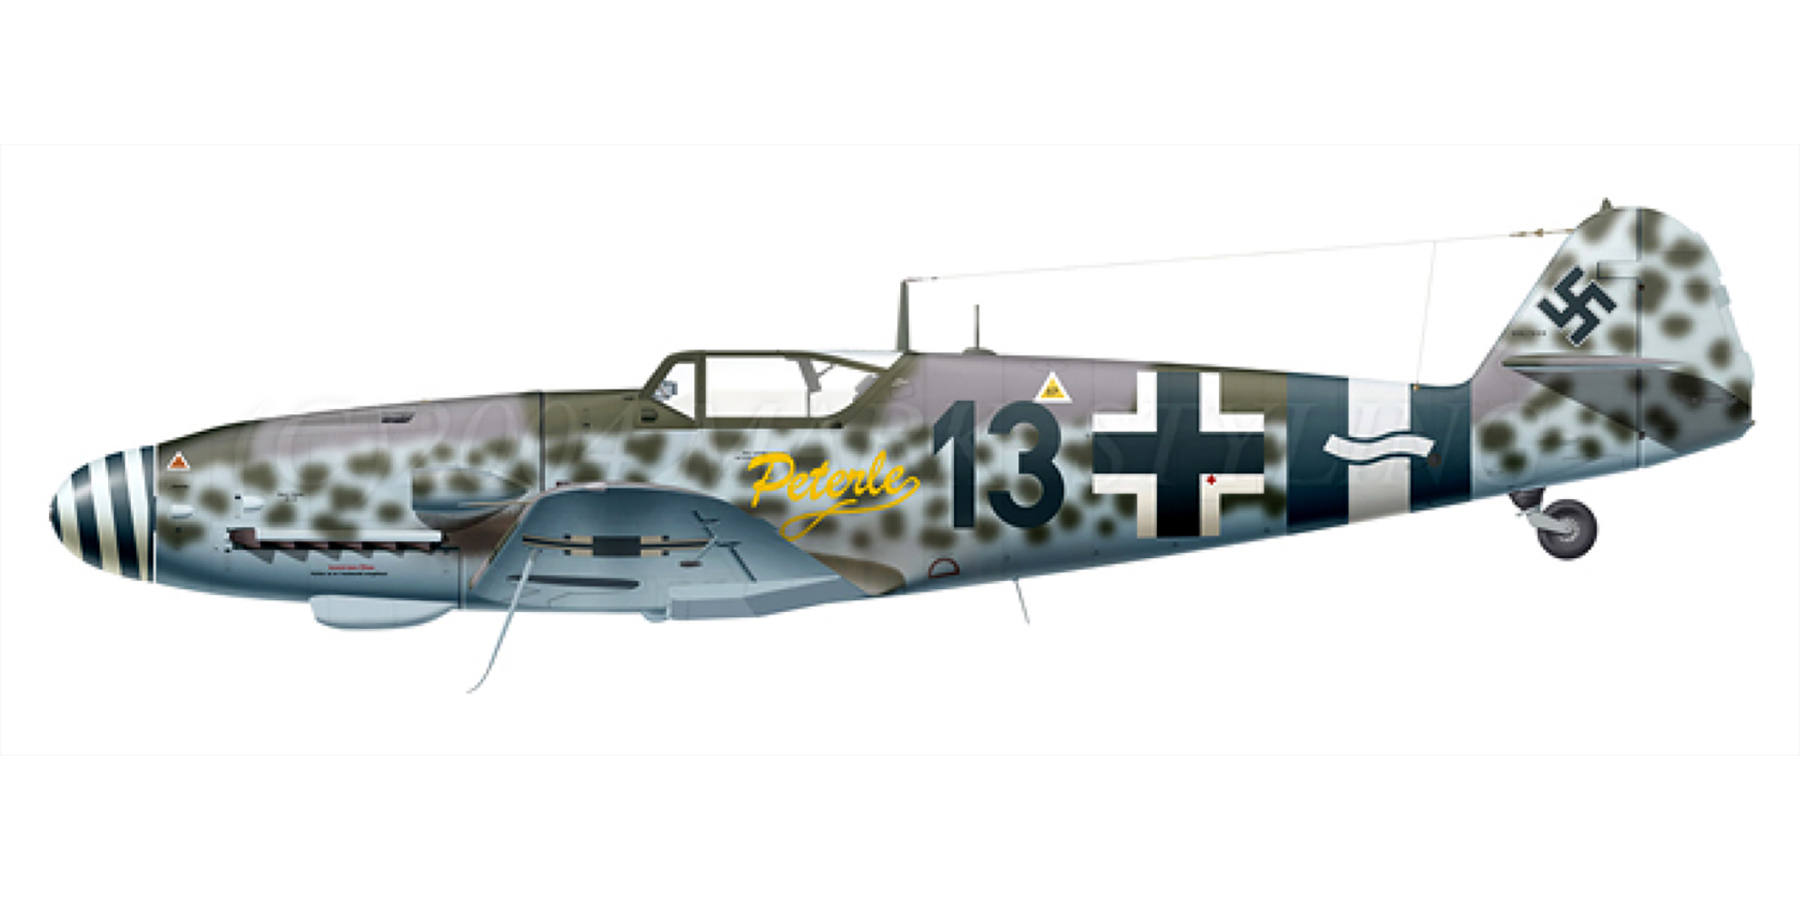 Messerschmitt Bf 109G14AS Erla 14.JG4 Black 13 Ernst Scheufele Reinersdorf Germany Oct 1944 0B